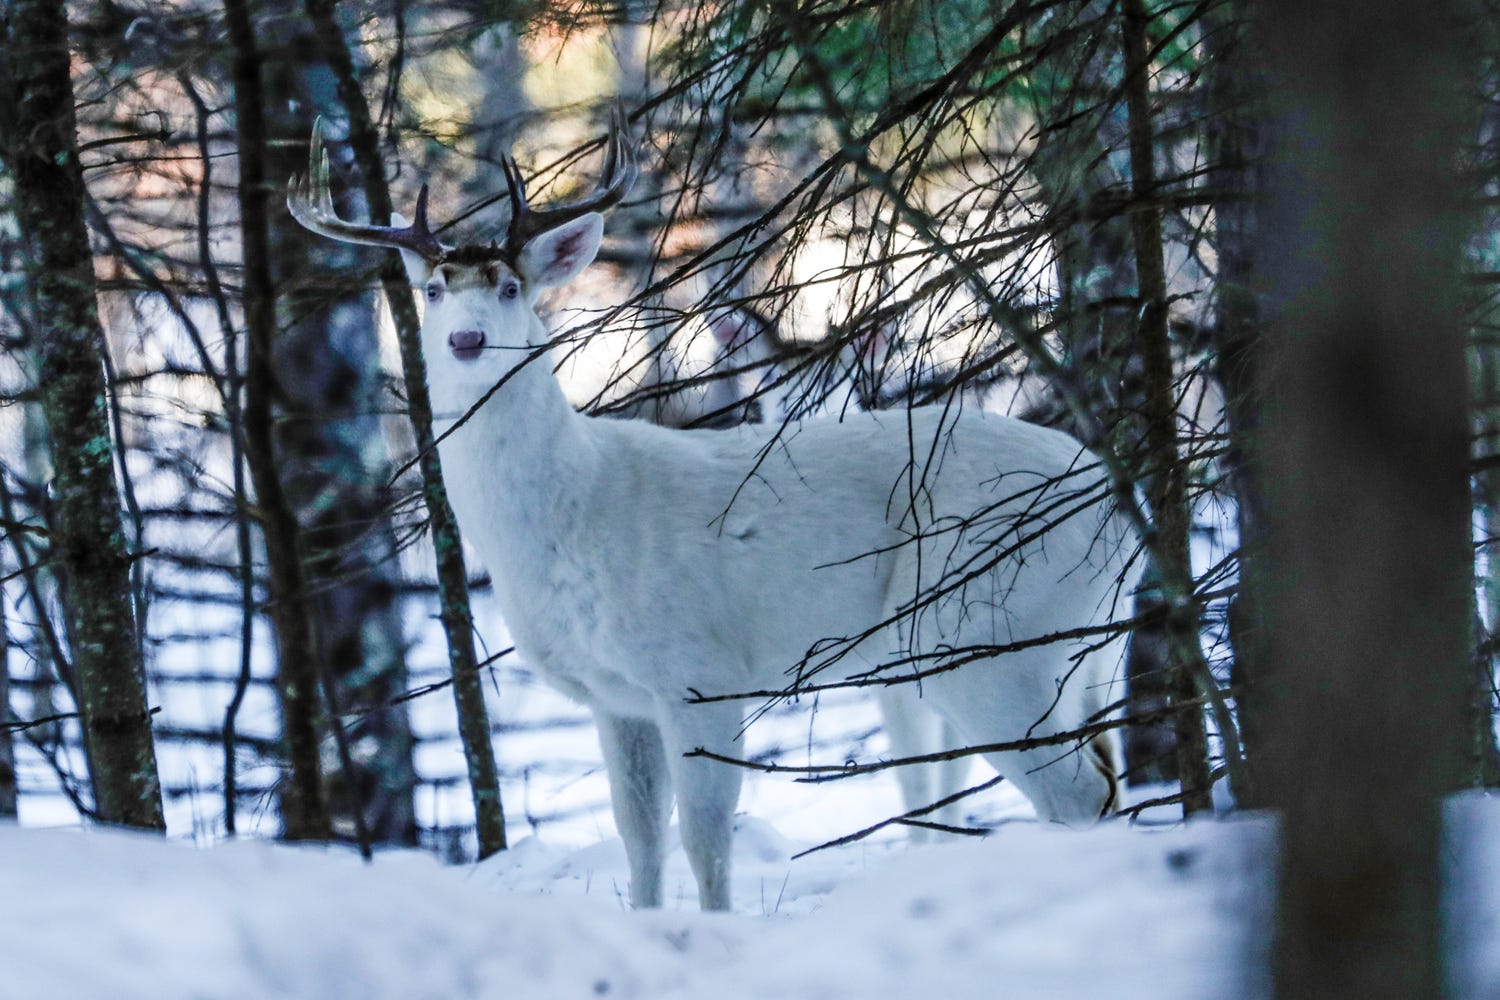 White deer in Wisconsin: Boulder Junction claims it has most albino deer